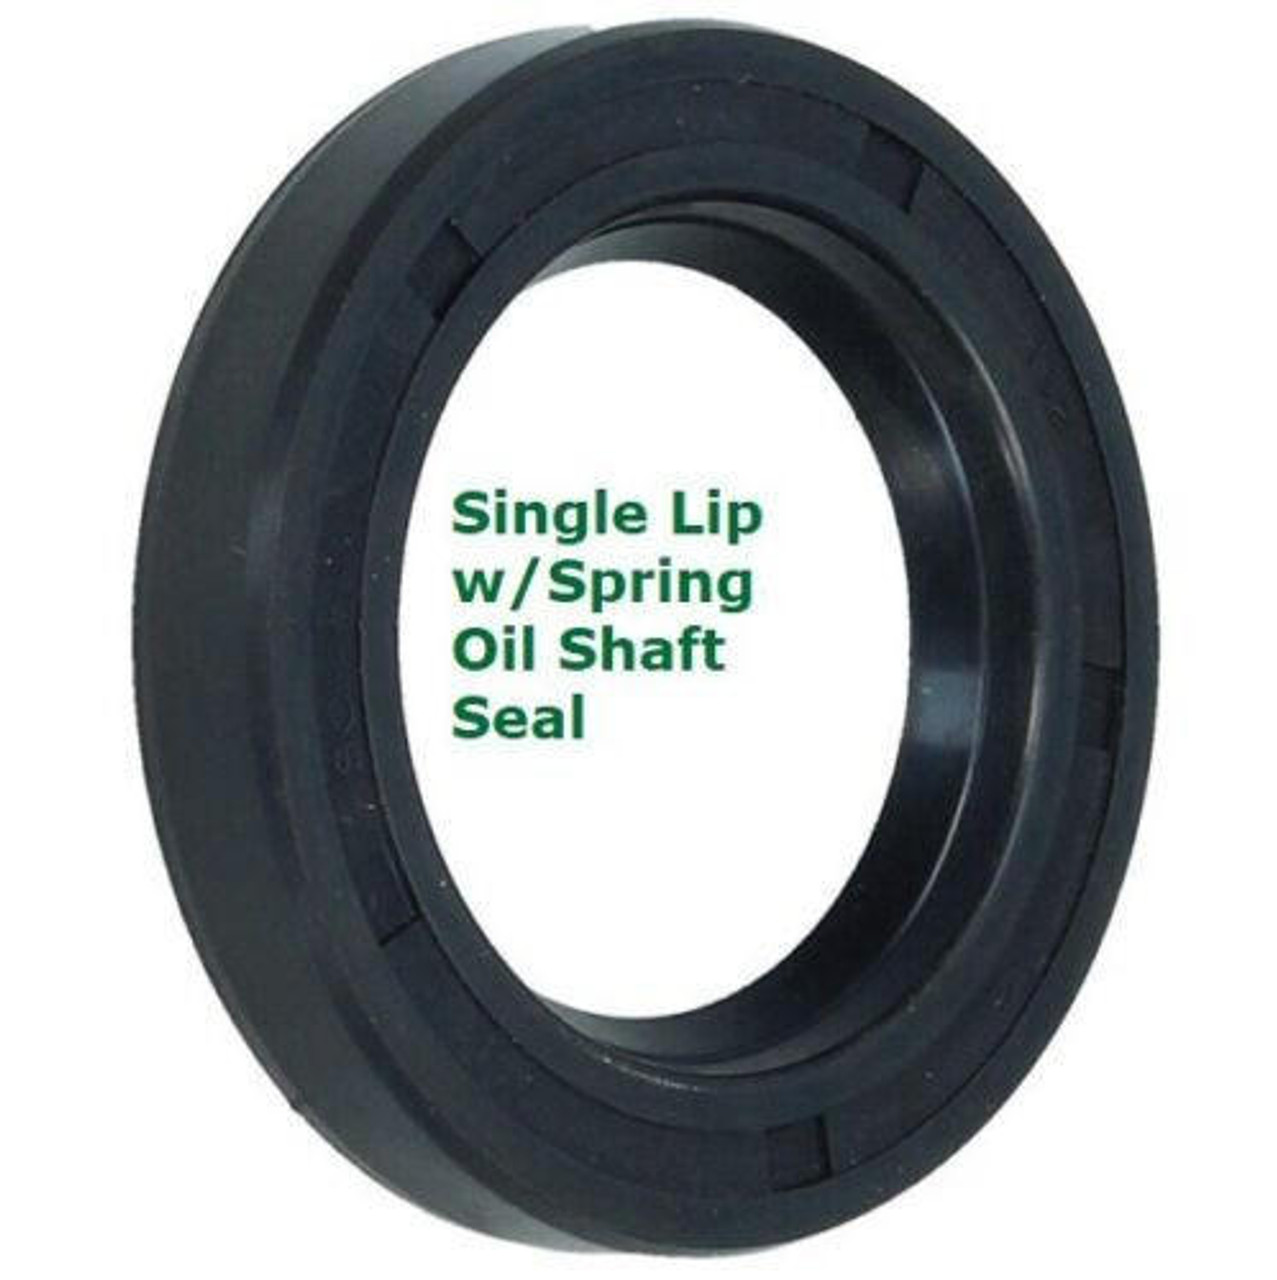 Metric Oil Shaft Seal 95 x 160 x 15mm   Single Lip   Price for 1 pc